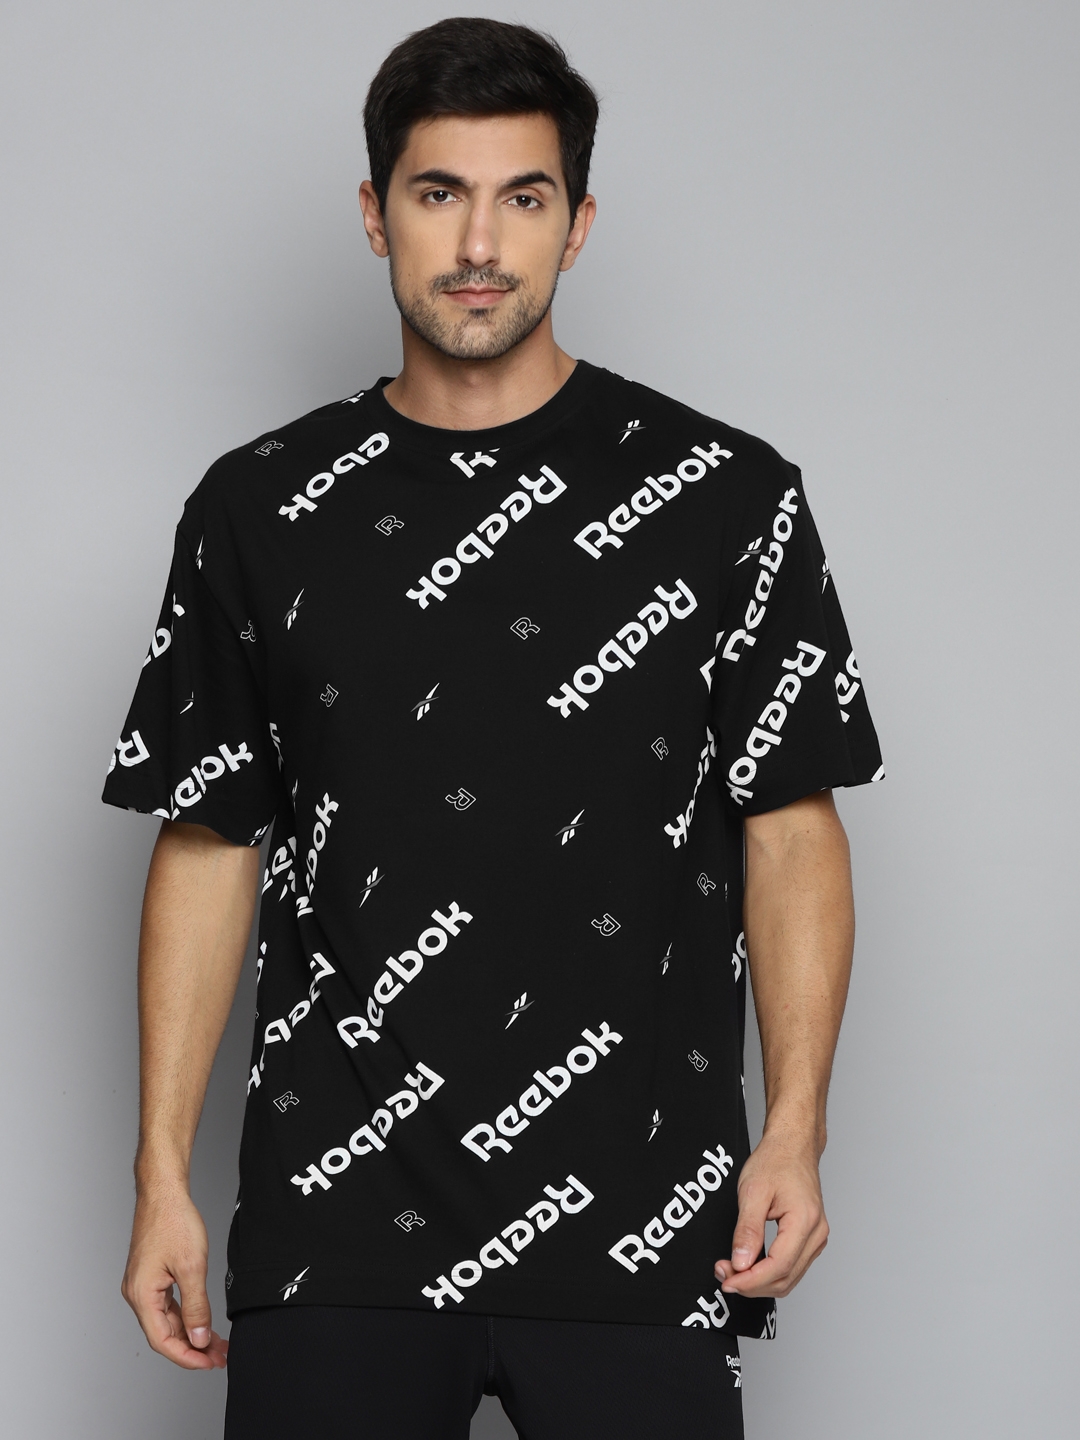 Reebok Unisex Black & White All Over Print Drop-Shoulder Sleeves Training T-shirt